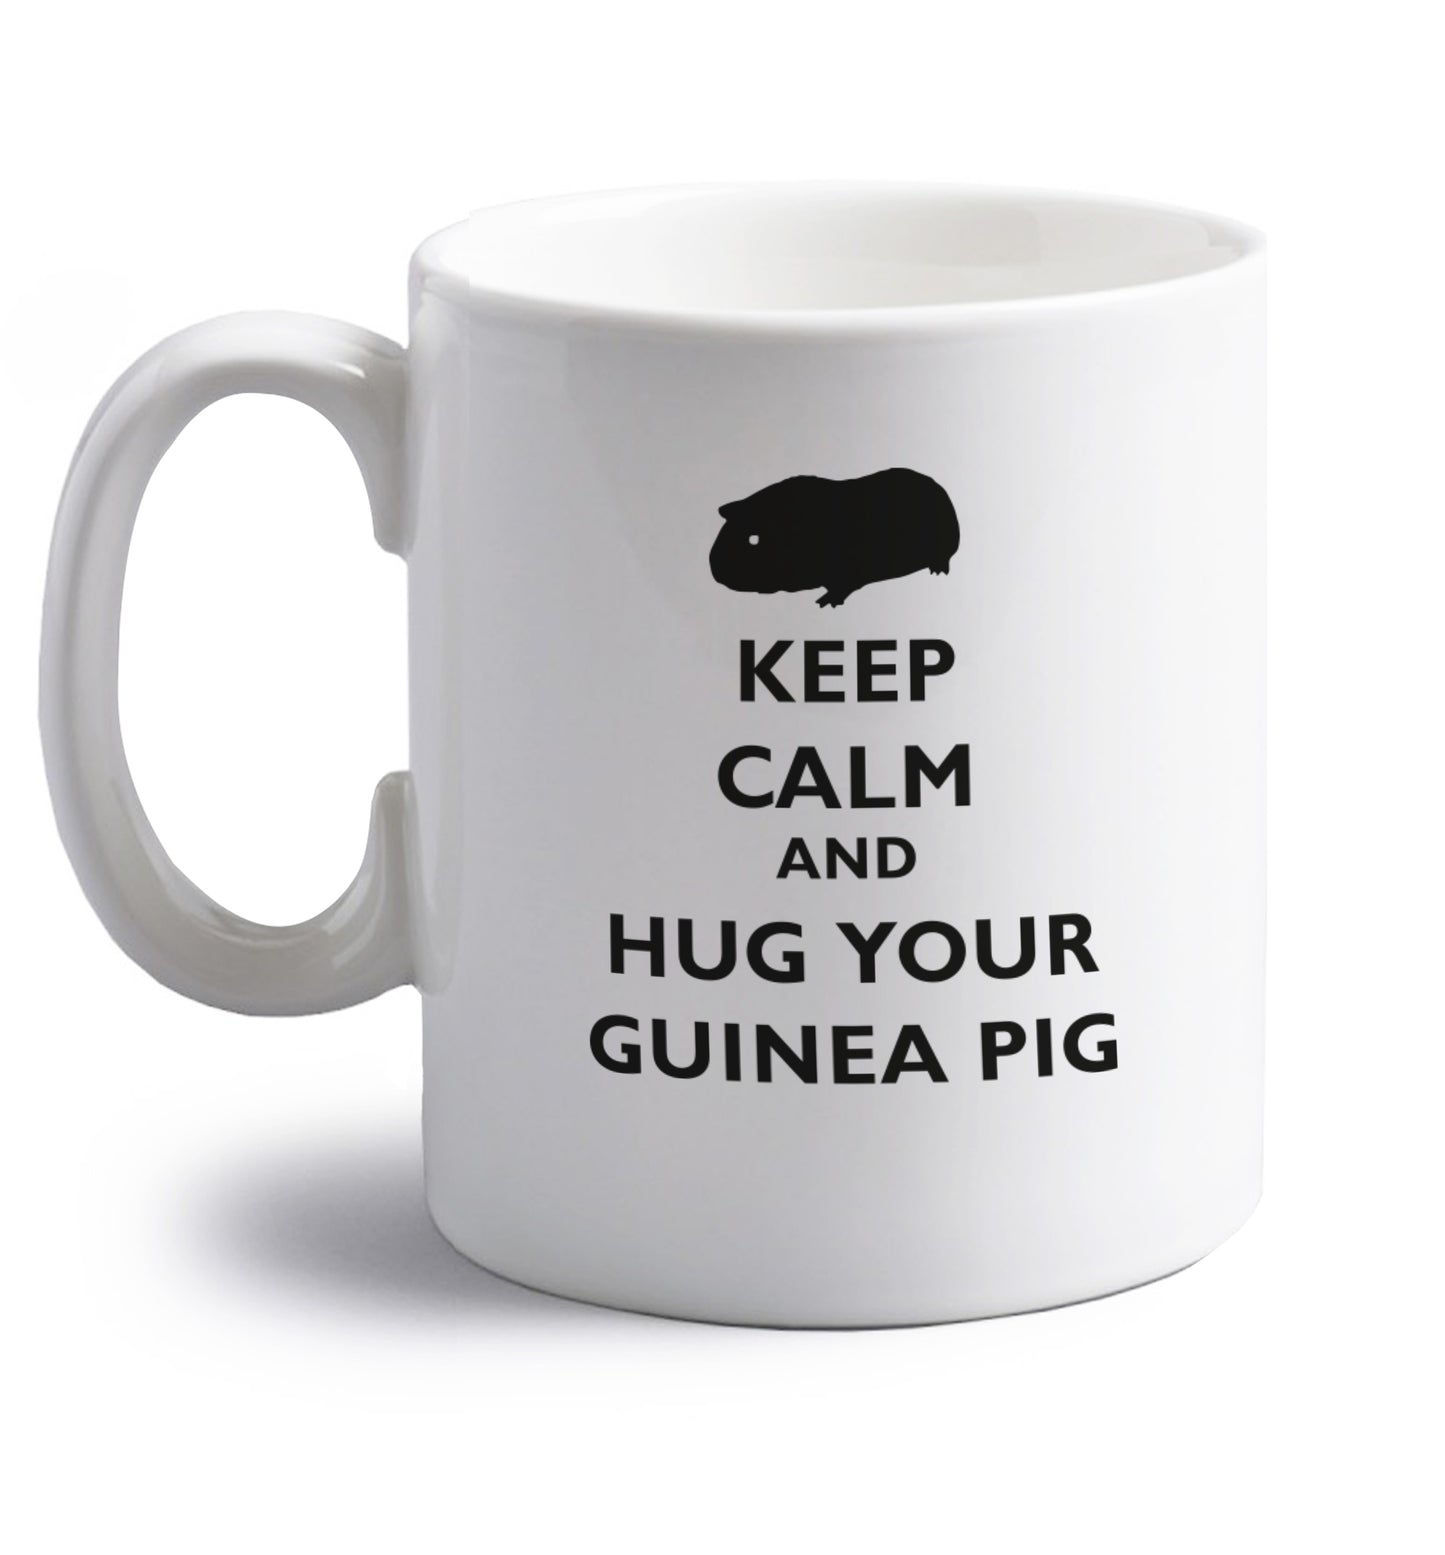 Keep calm and hug your guineapig right handed white ceramic mug 